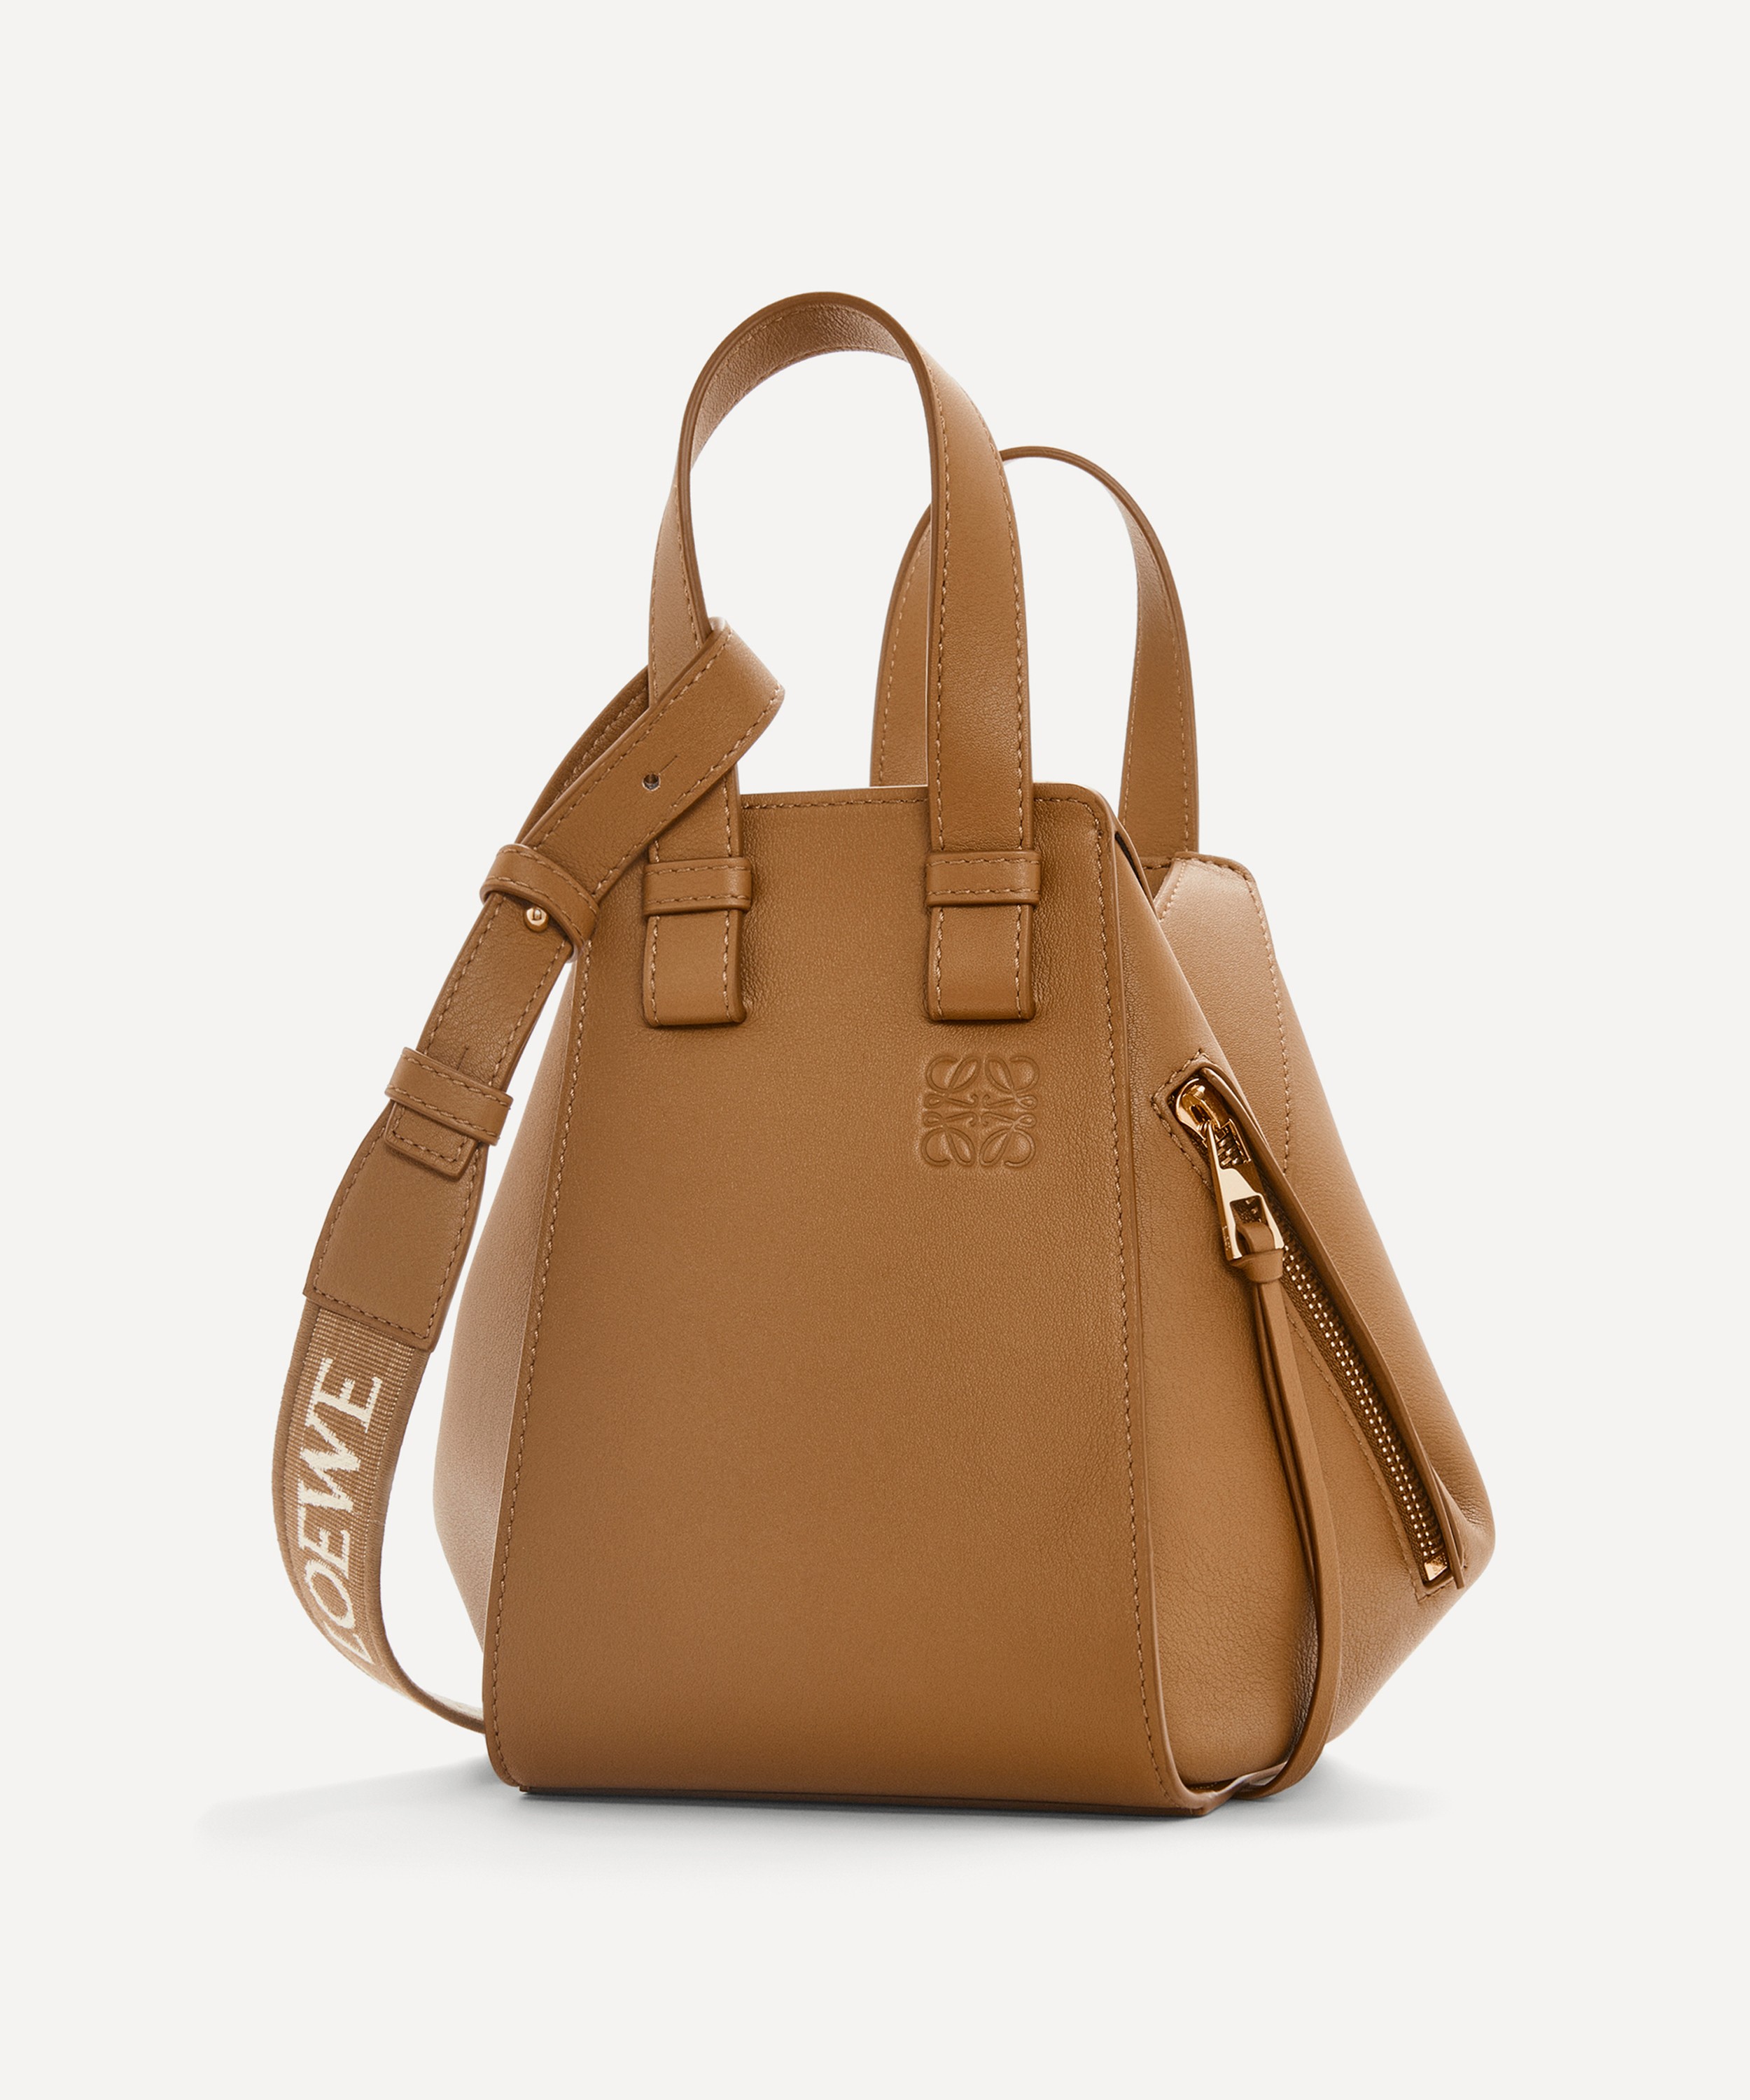 Loewe Women's Compact Hammock Bag